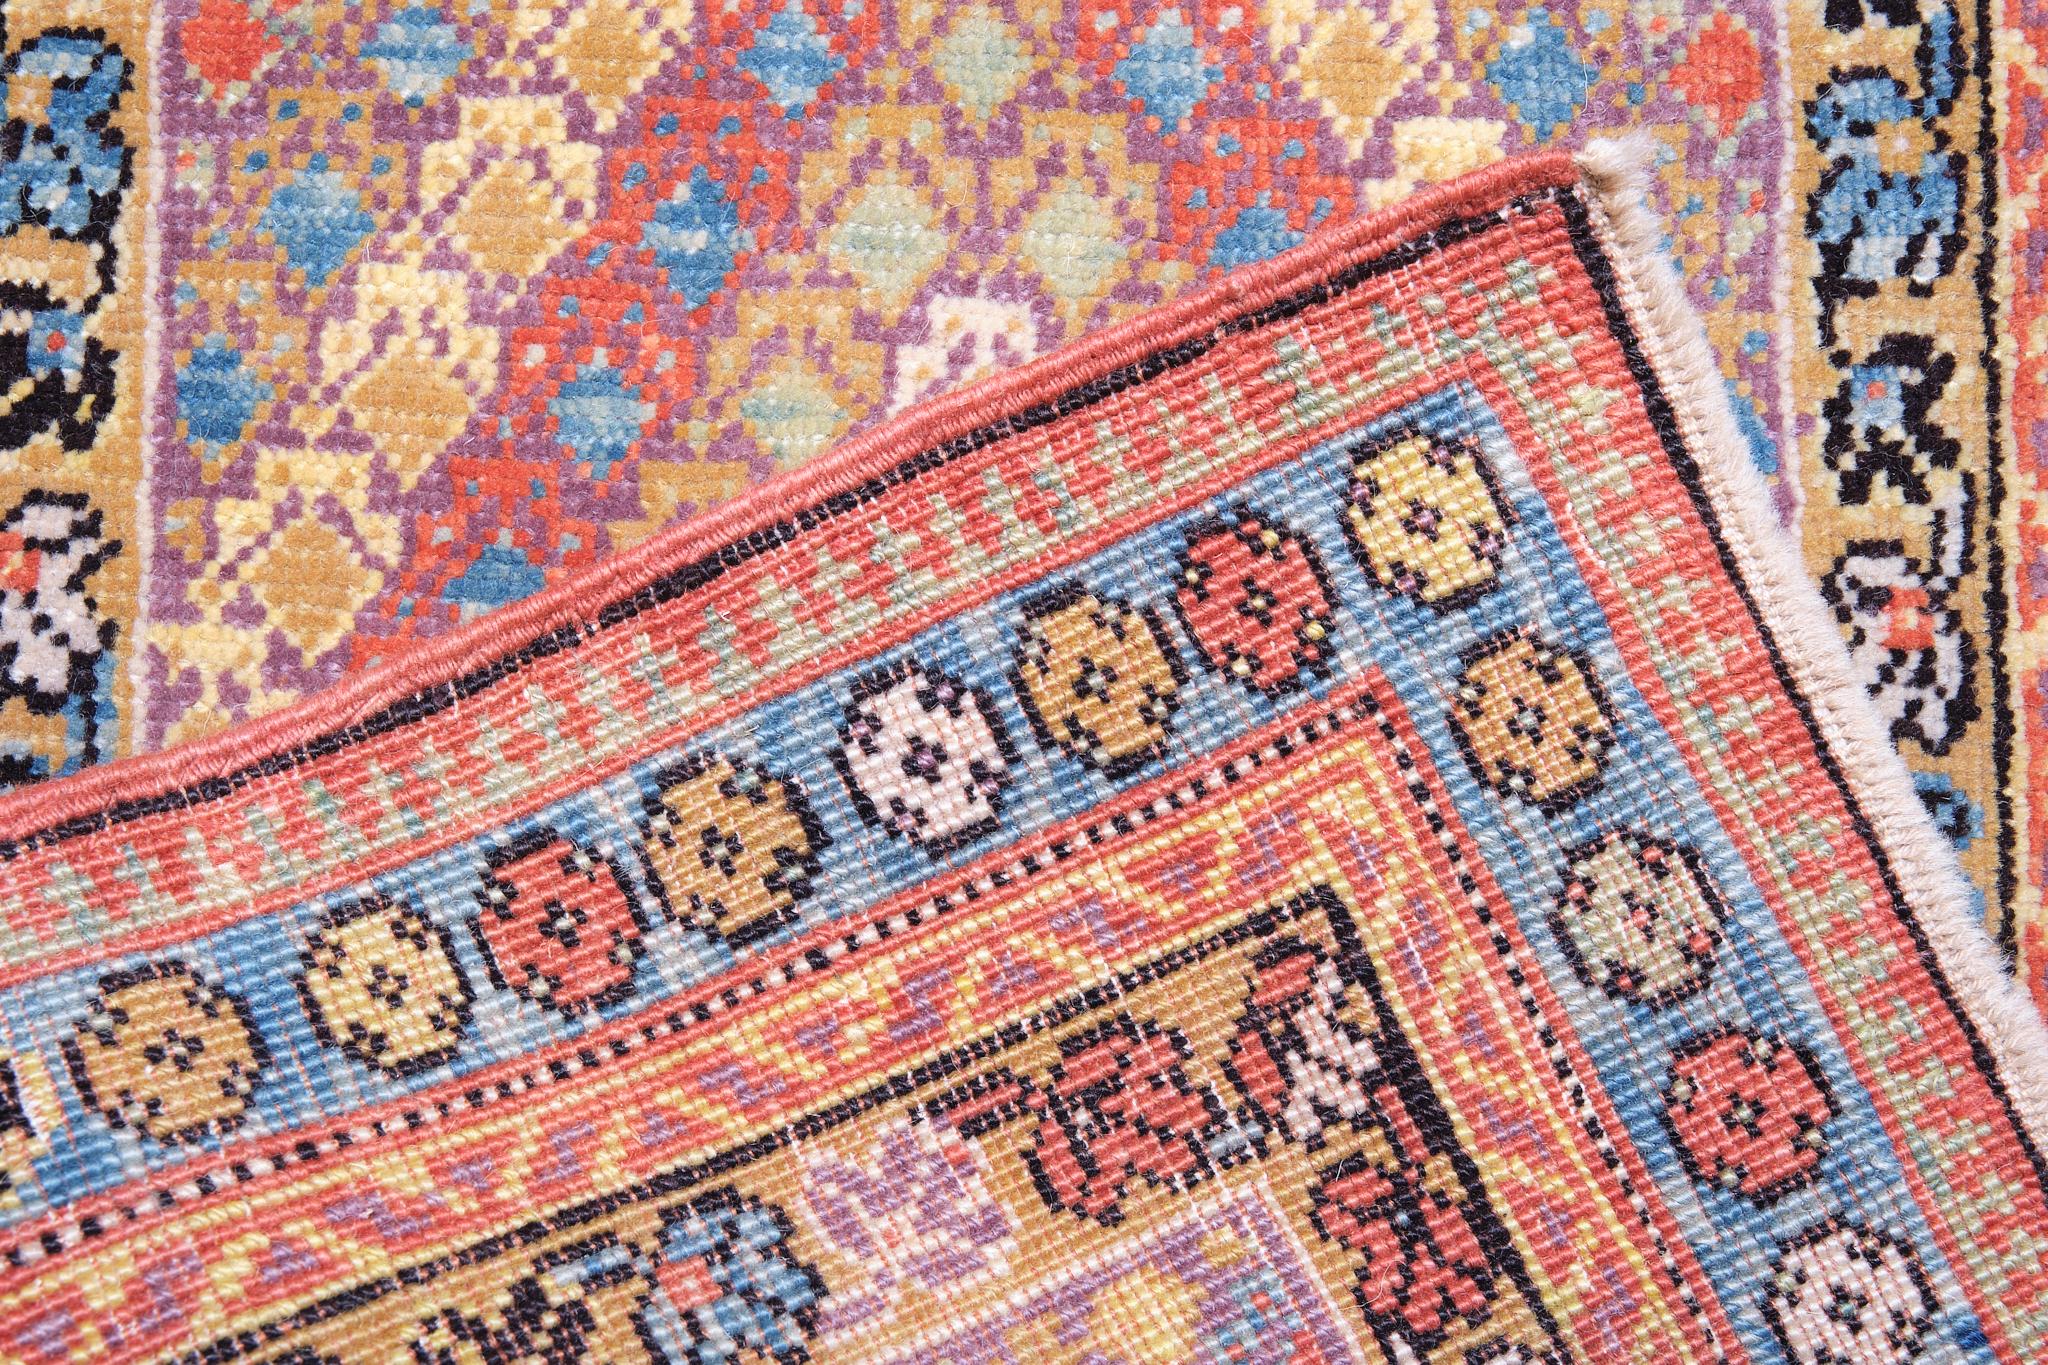 Vegetable Dyed Ararat Rugs Anatolian Yastik Rug Revival Turkish Wagireh Carpet Natural Dyed For Sale